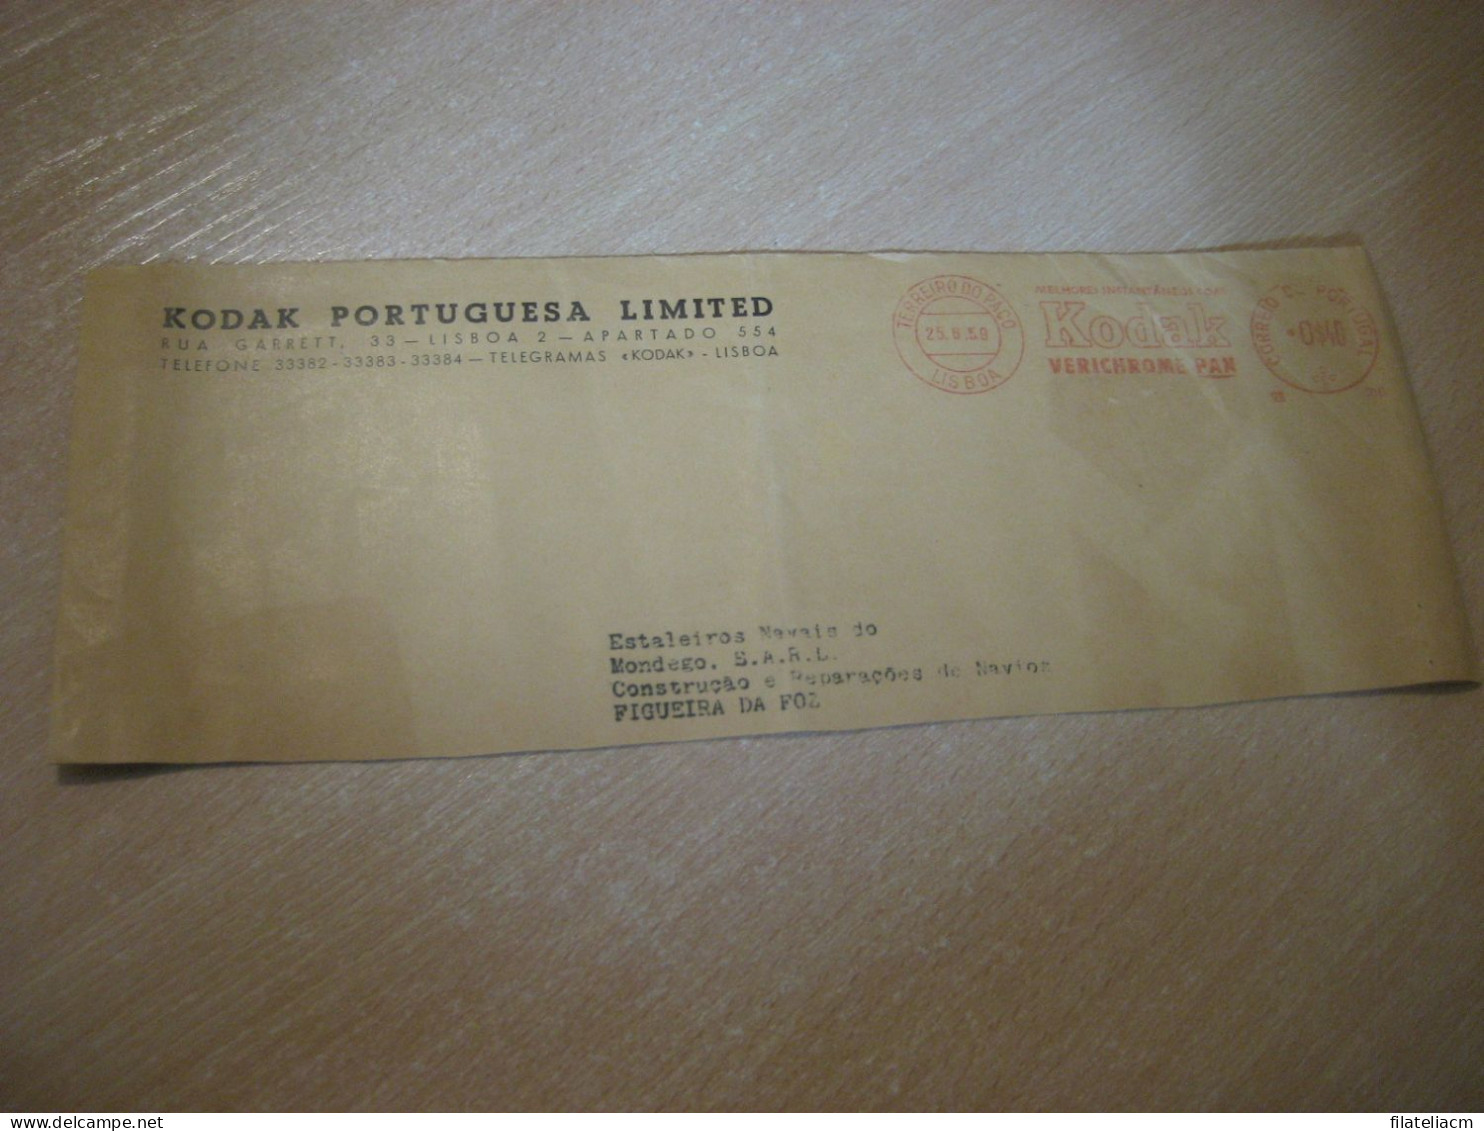 LISBOA 1959 To Figueira Da Foz KODAK Photo Photography Meter Mail Cancel Cut Cuted Cover PORTUGAL - Storia Postale